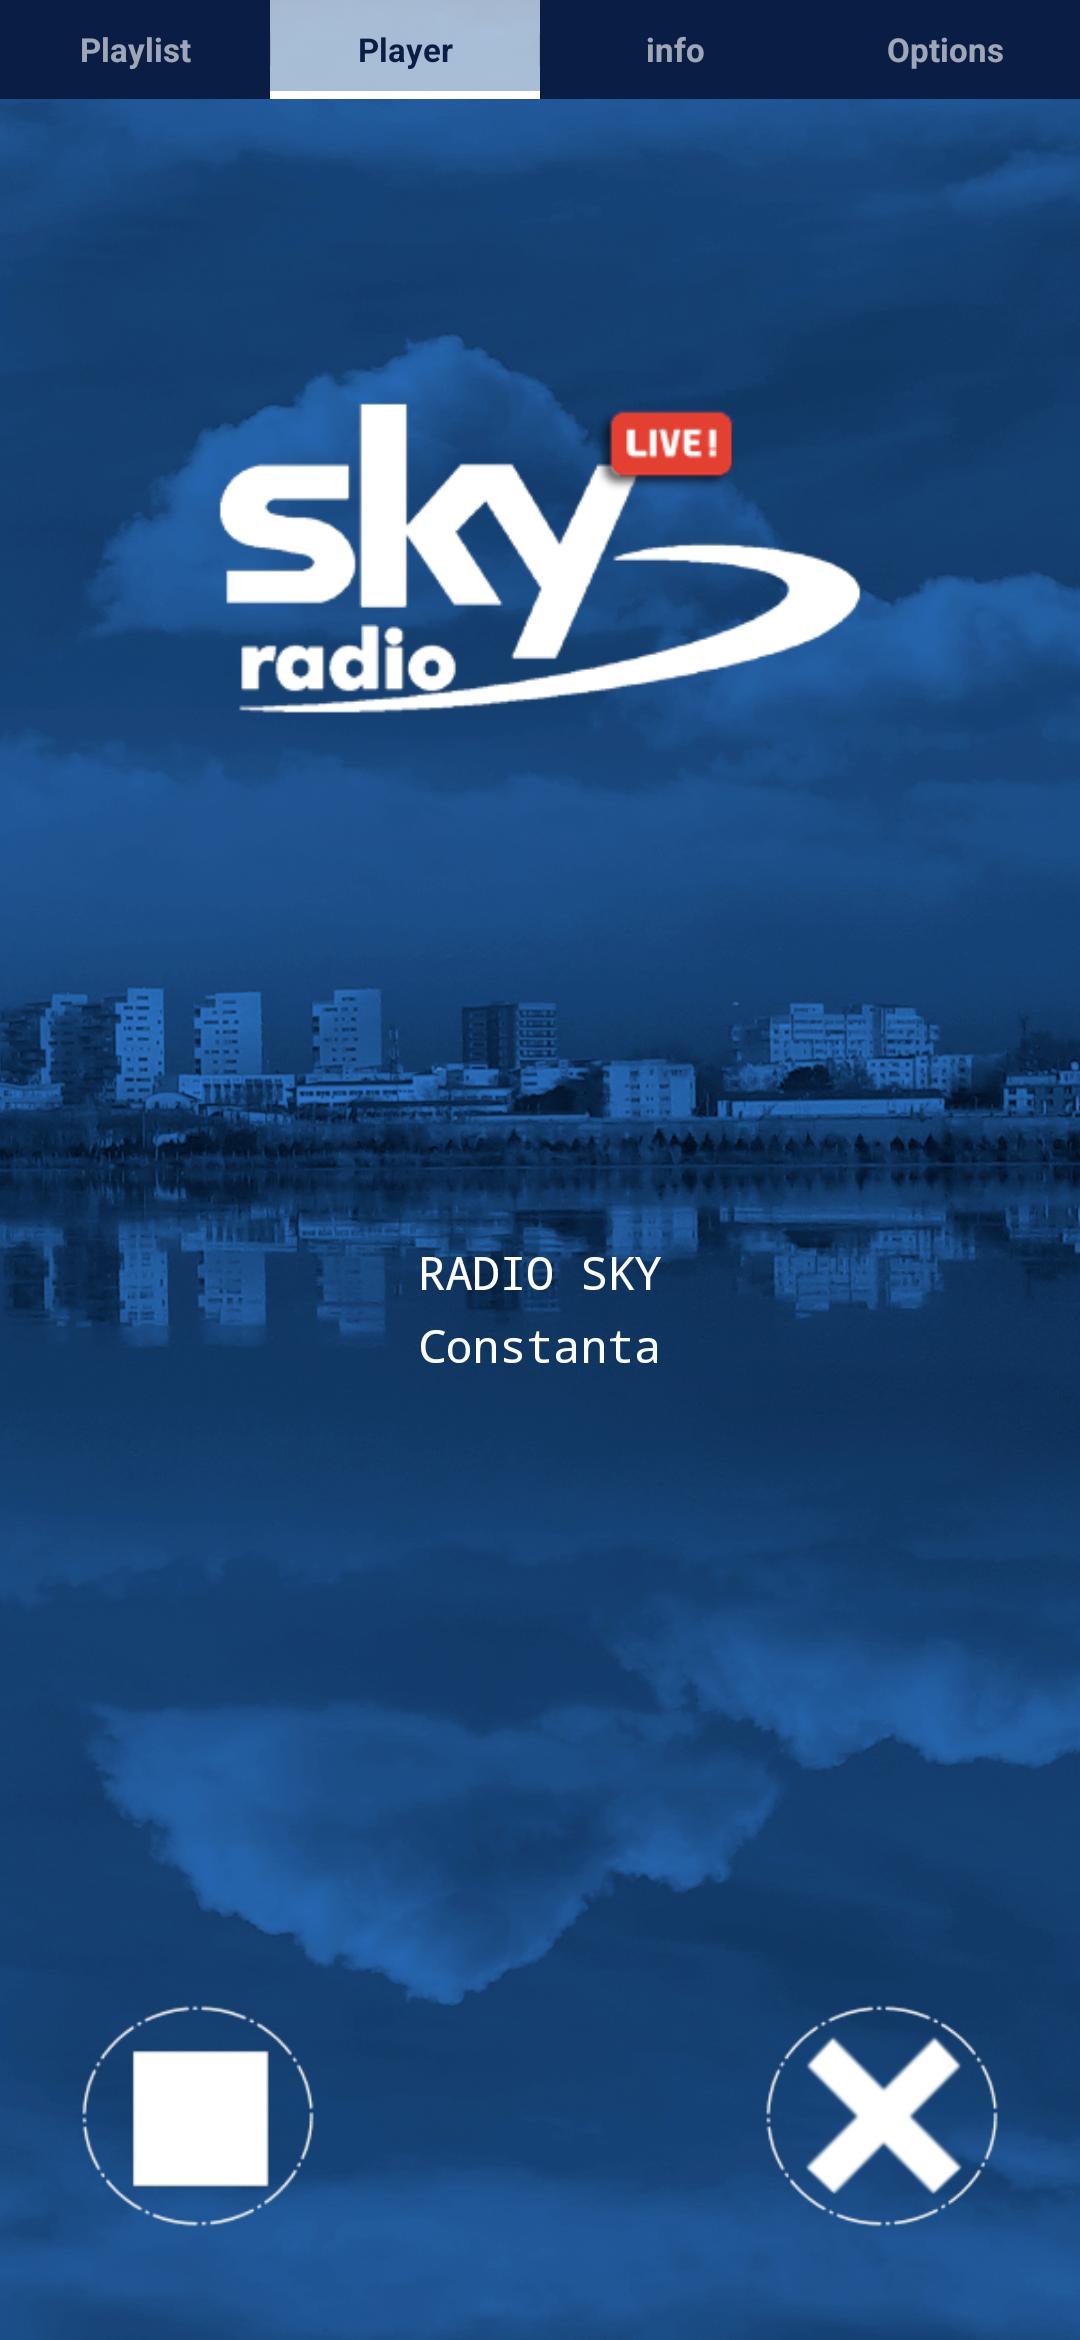 Radio Sky Constanta APK for Android Download